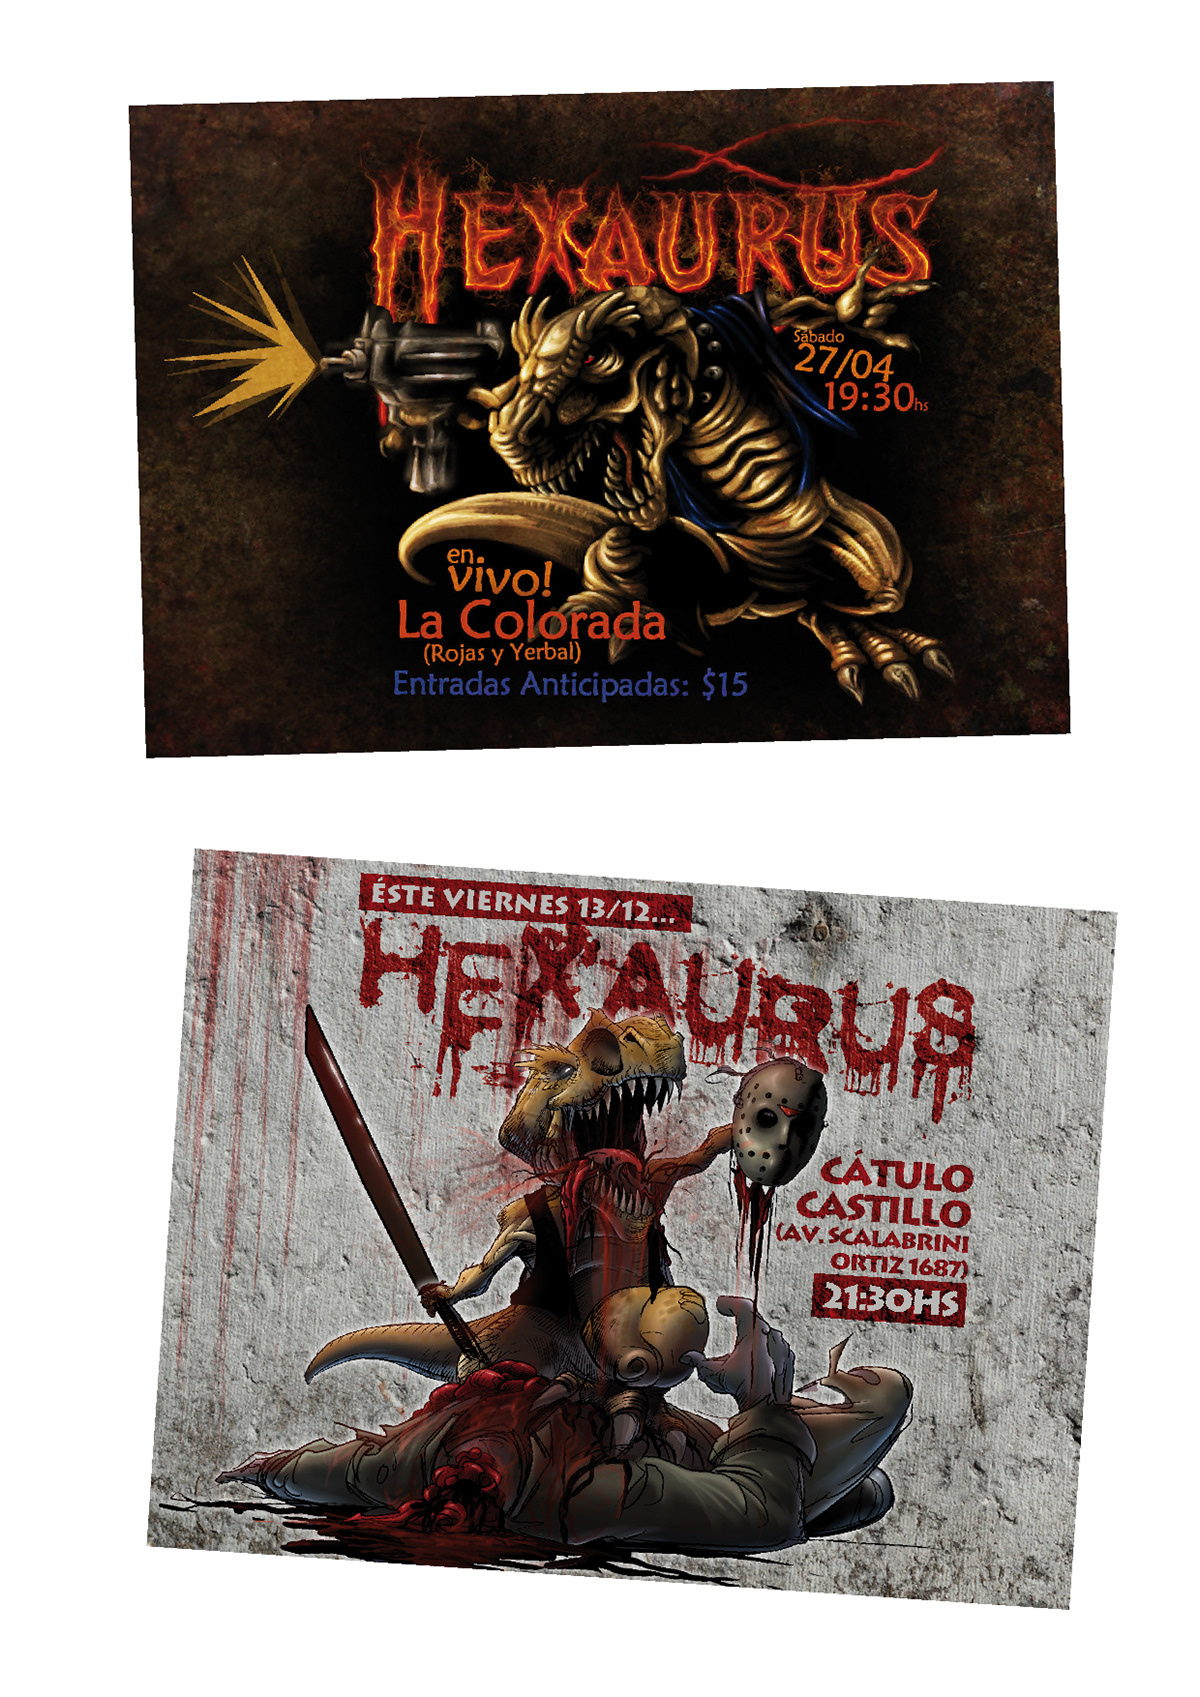 song musica heavy metal hexaurus dinosaurio metal thrash